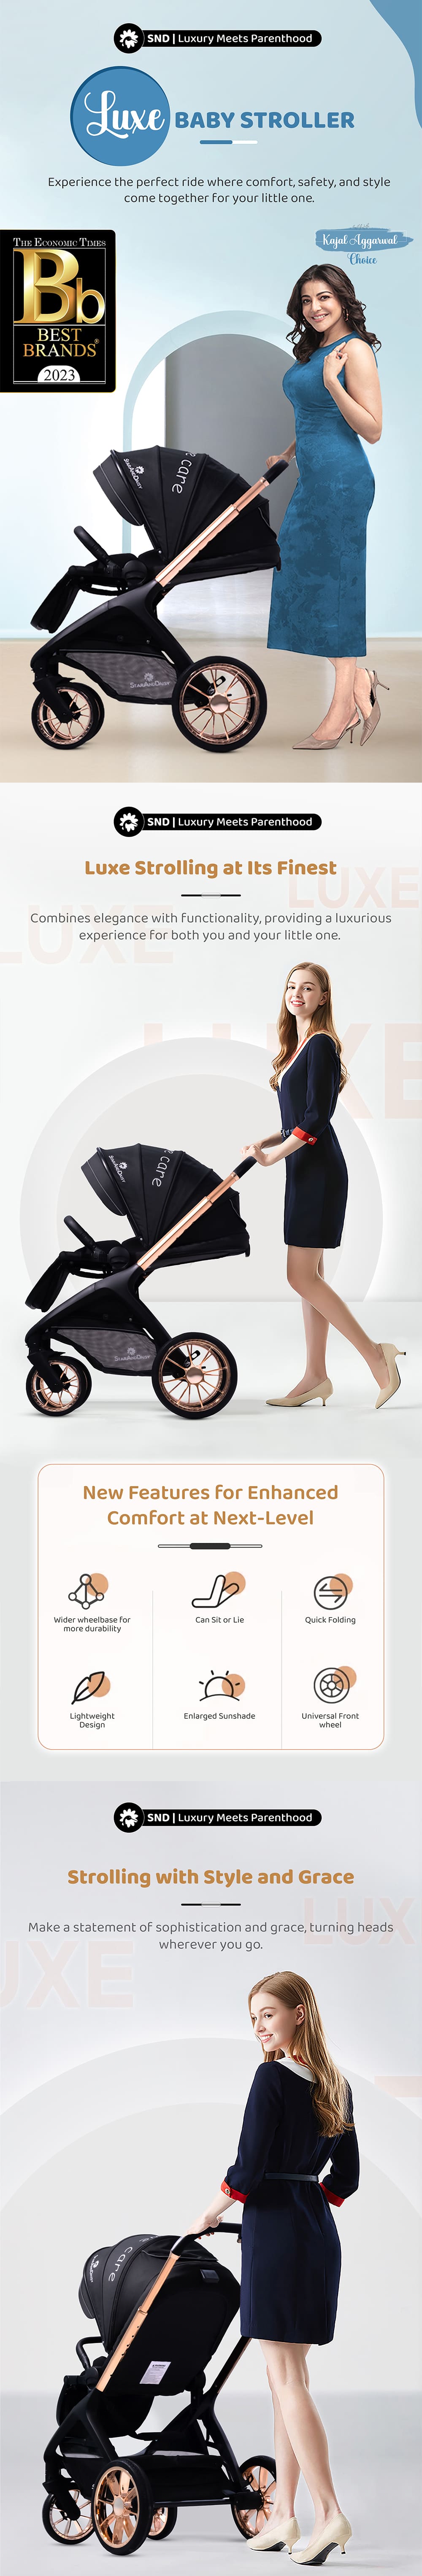 Luxury Baby Stroller for Travel